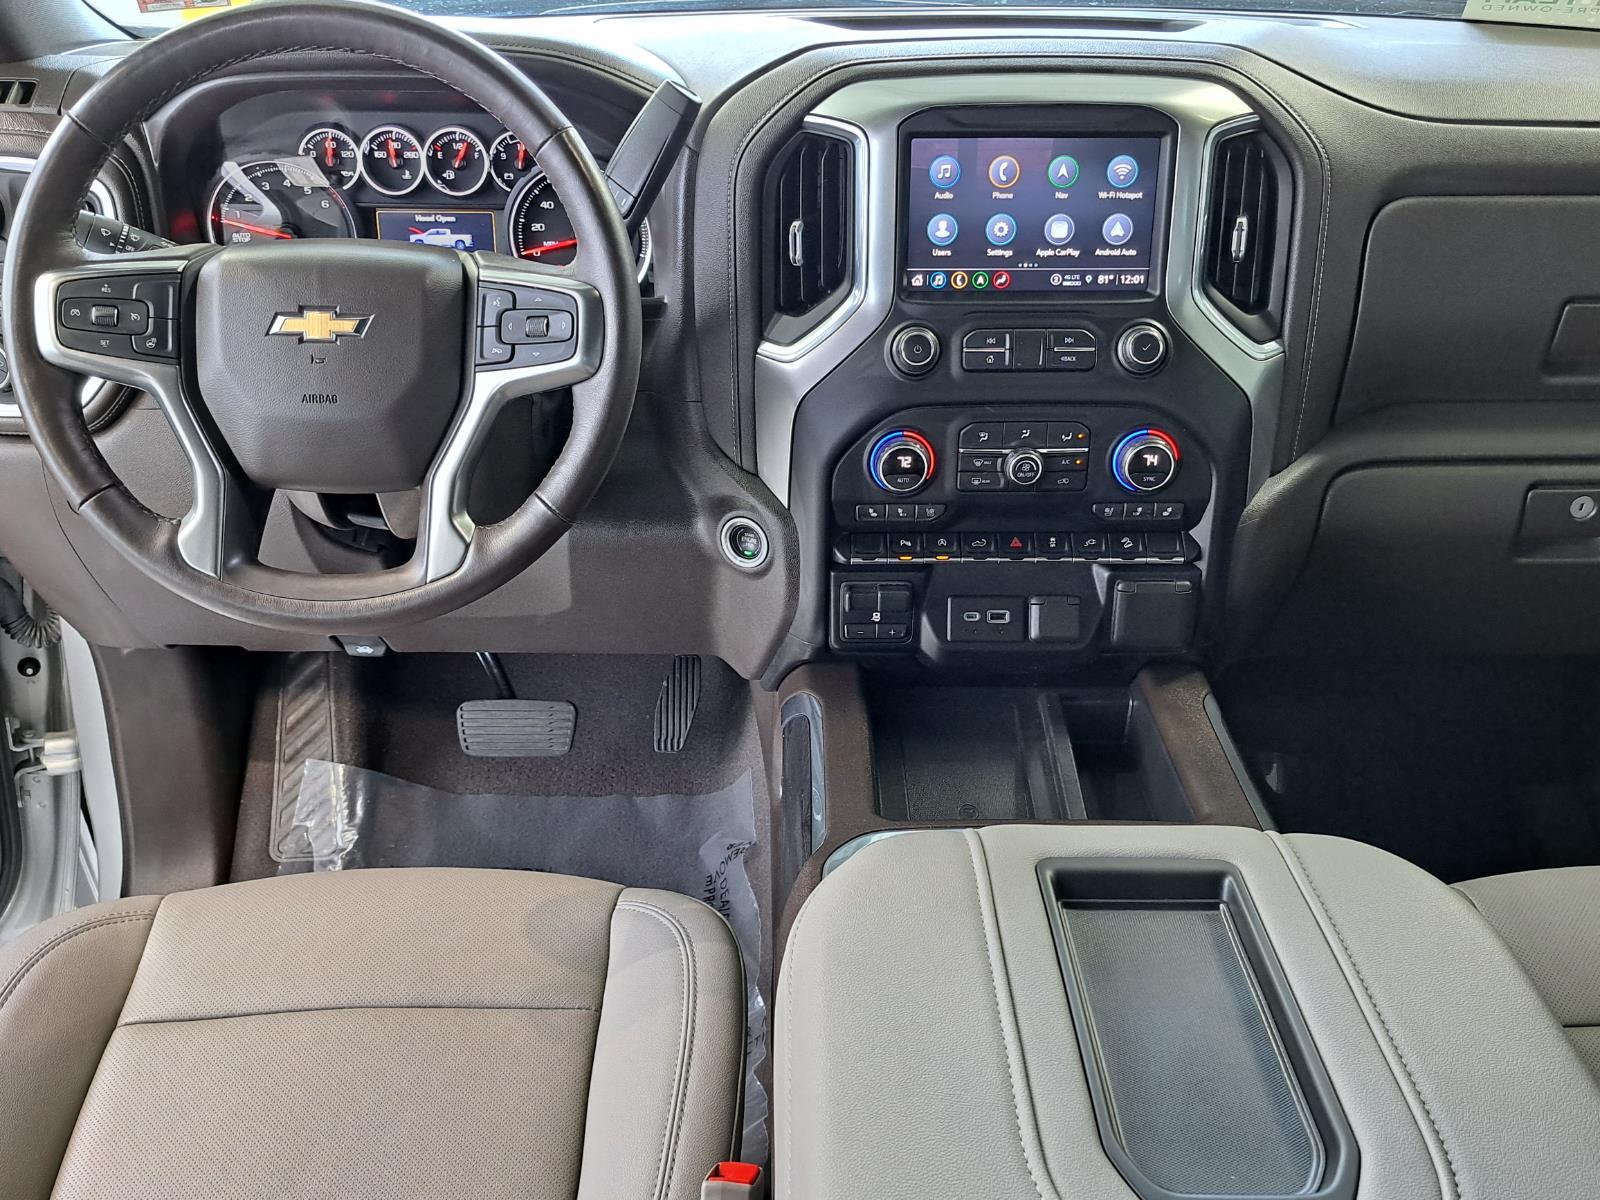 2021 Chevrolet Silverado 1500 LTZ Crew Cab Pickup Four Wheel Drive thumbnail 69